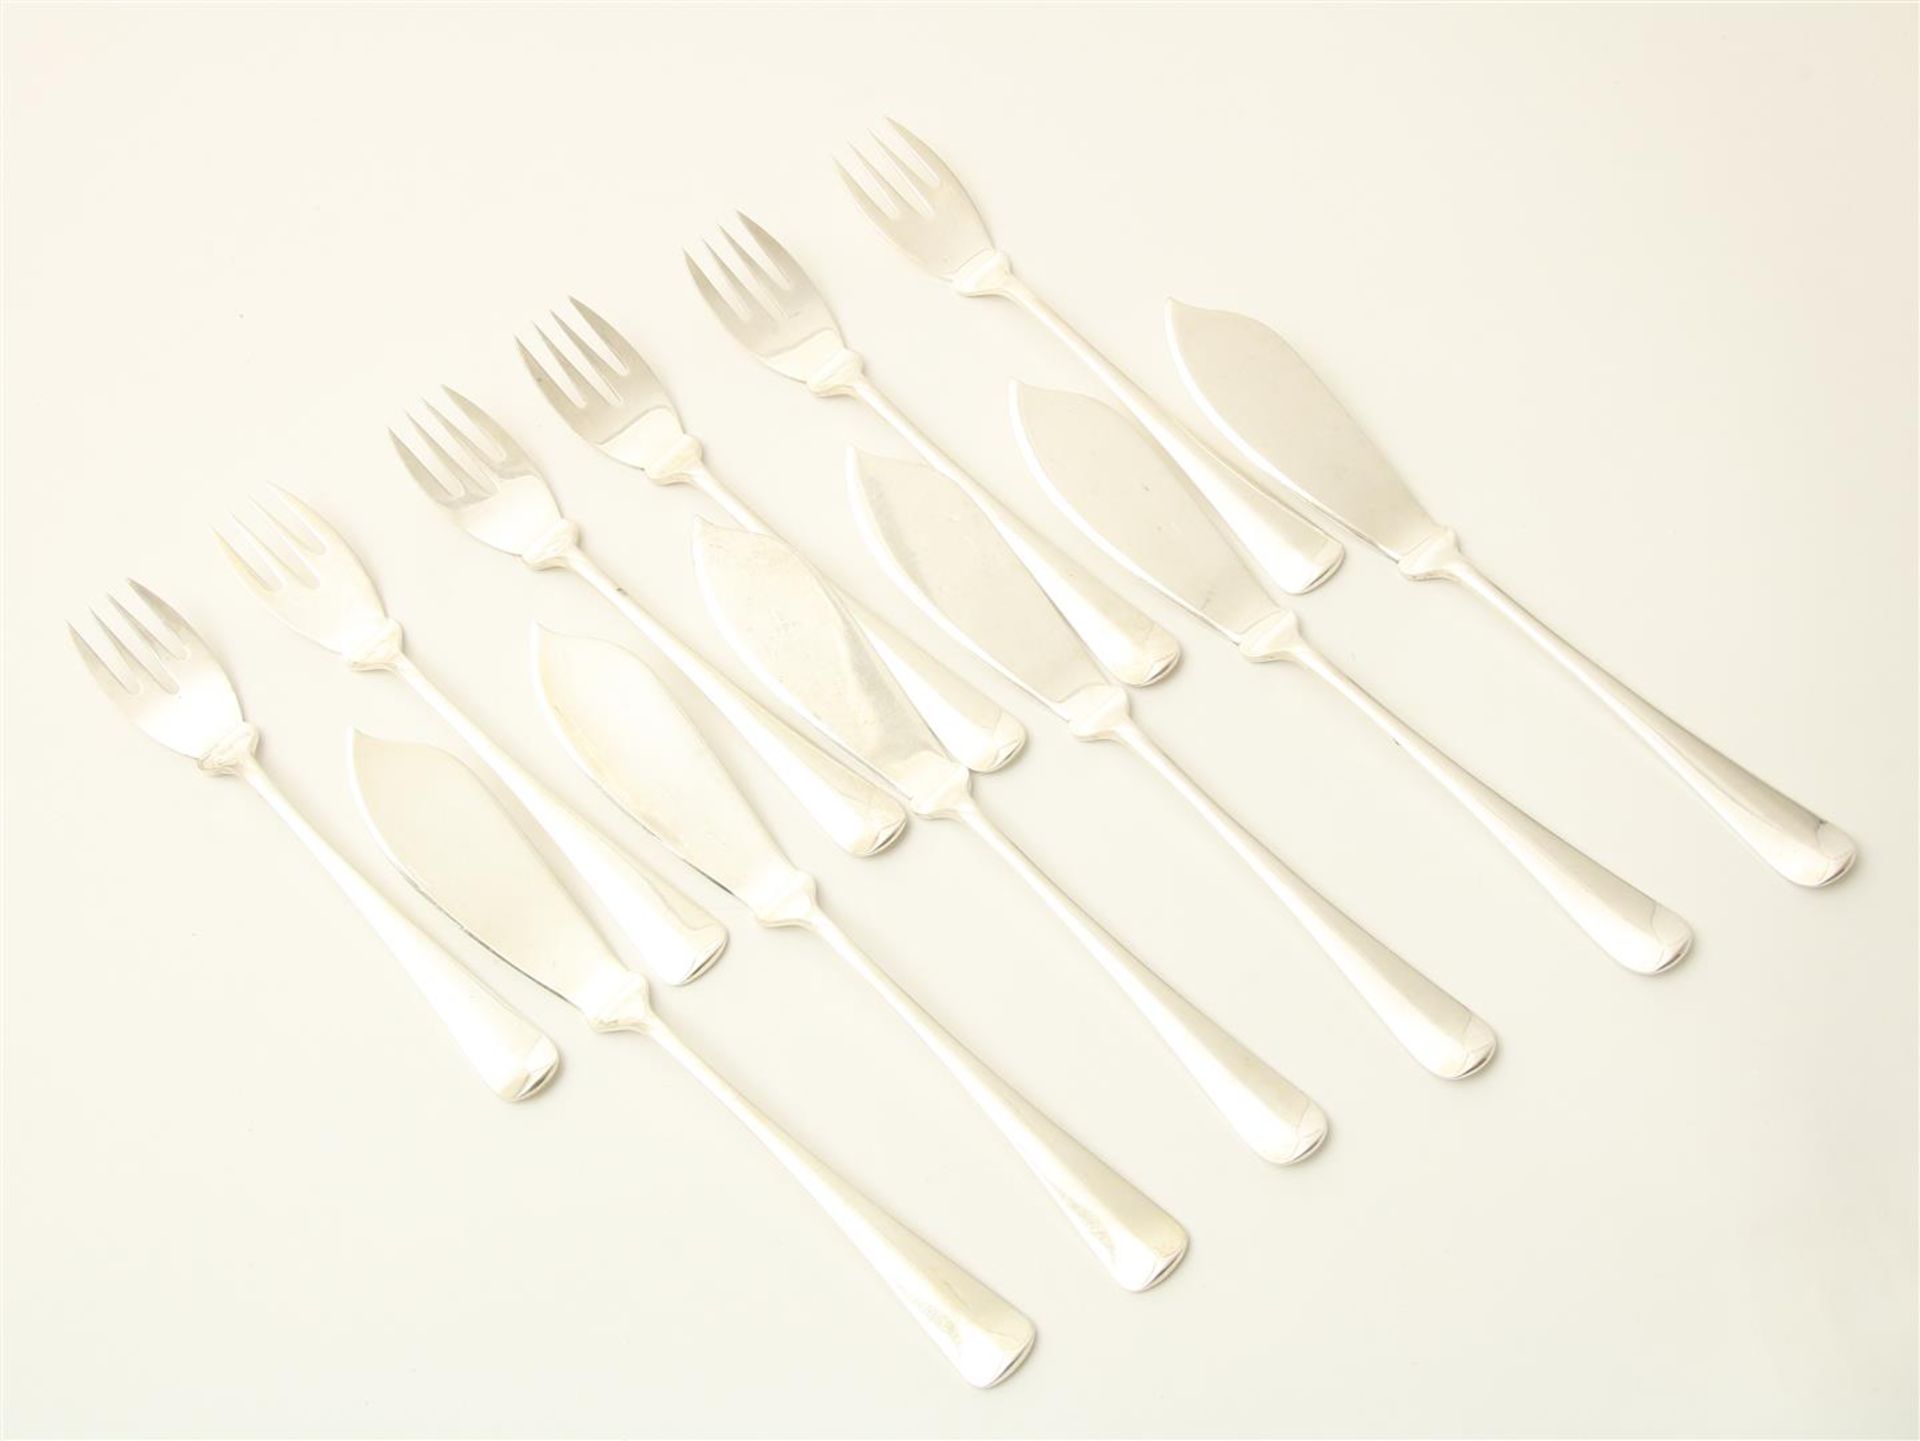 Silver fish cutlery, Haags Lofje